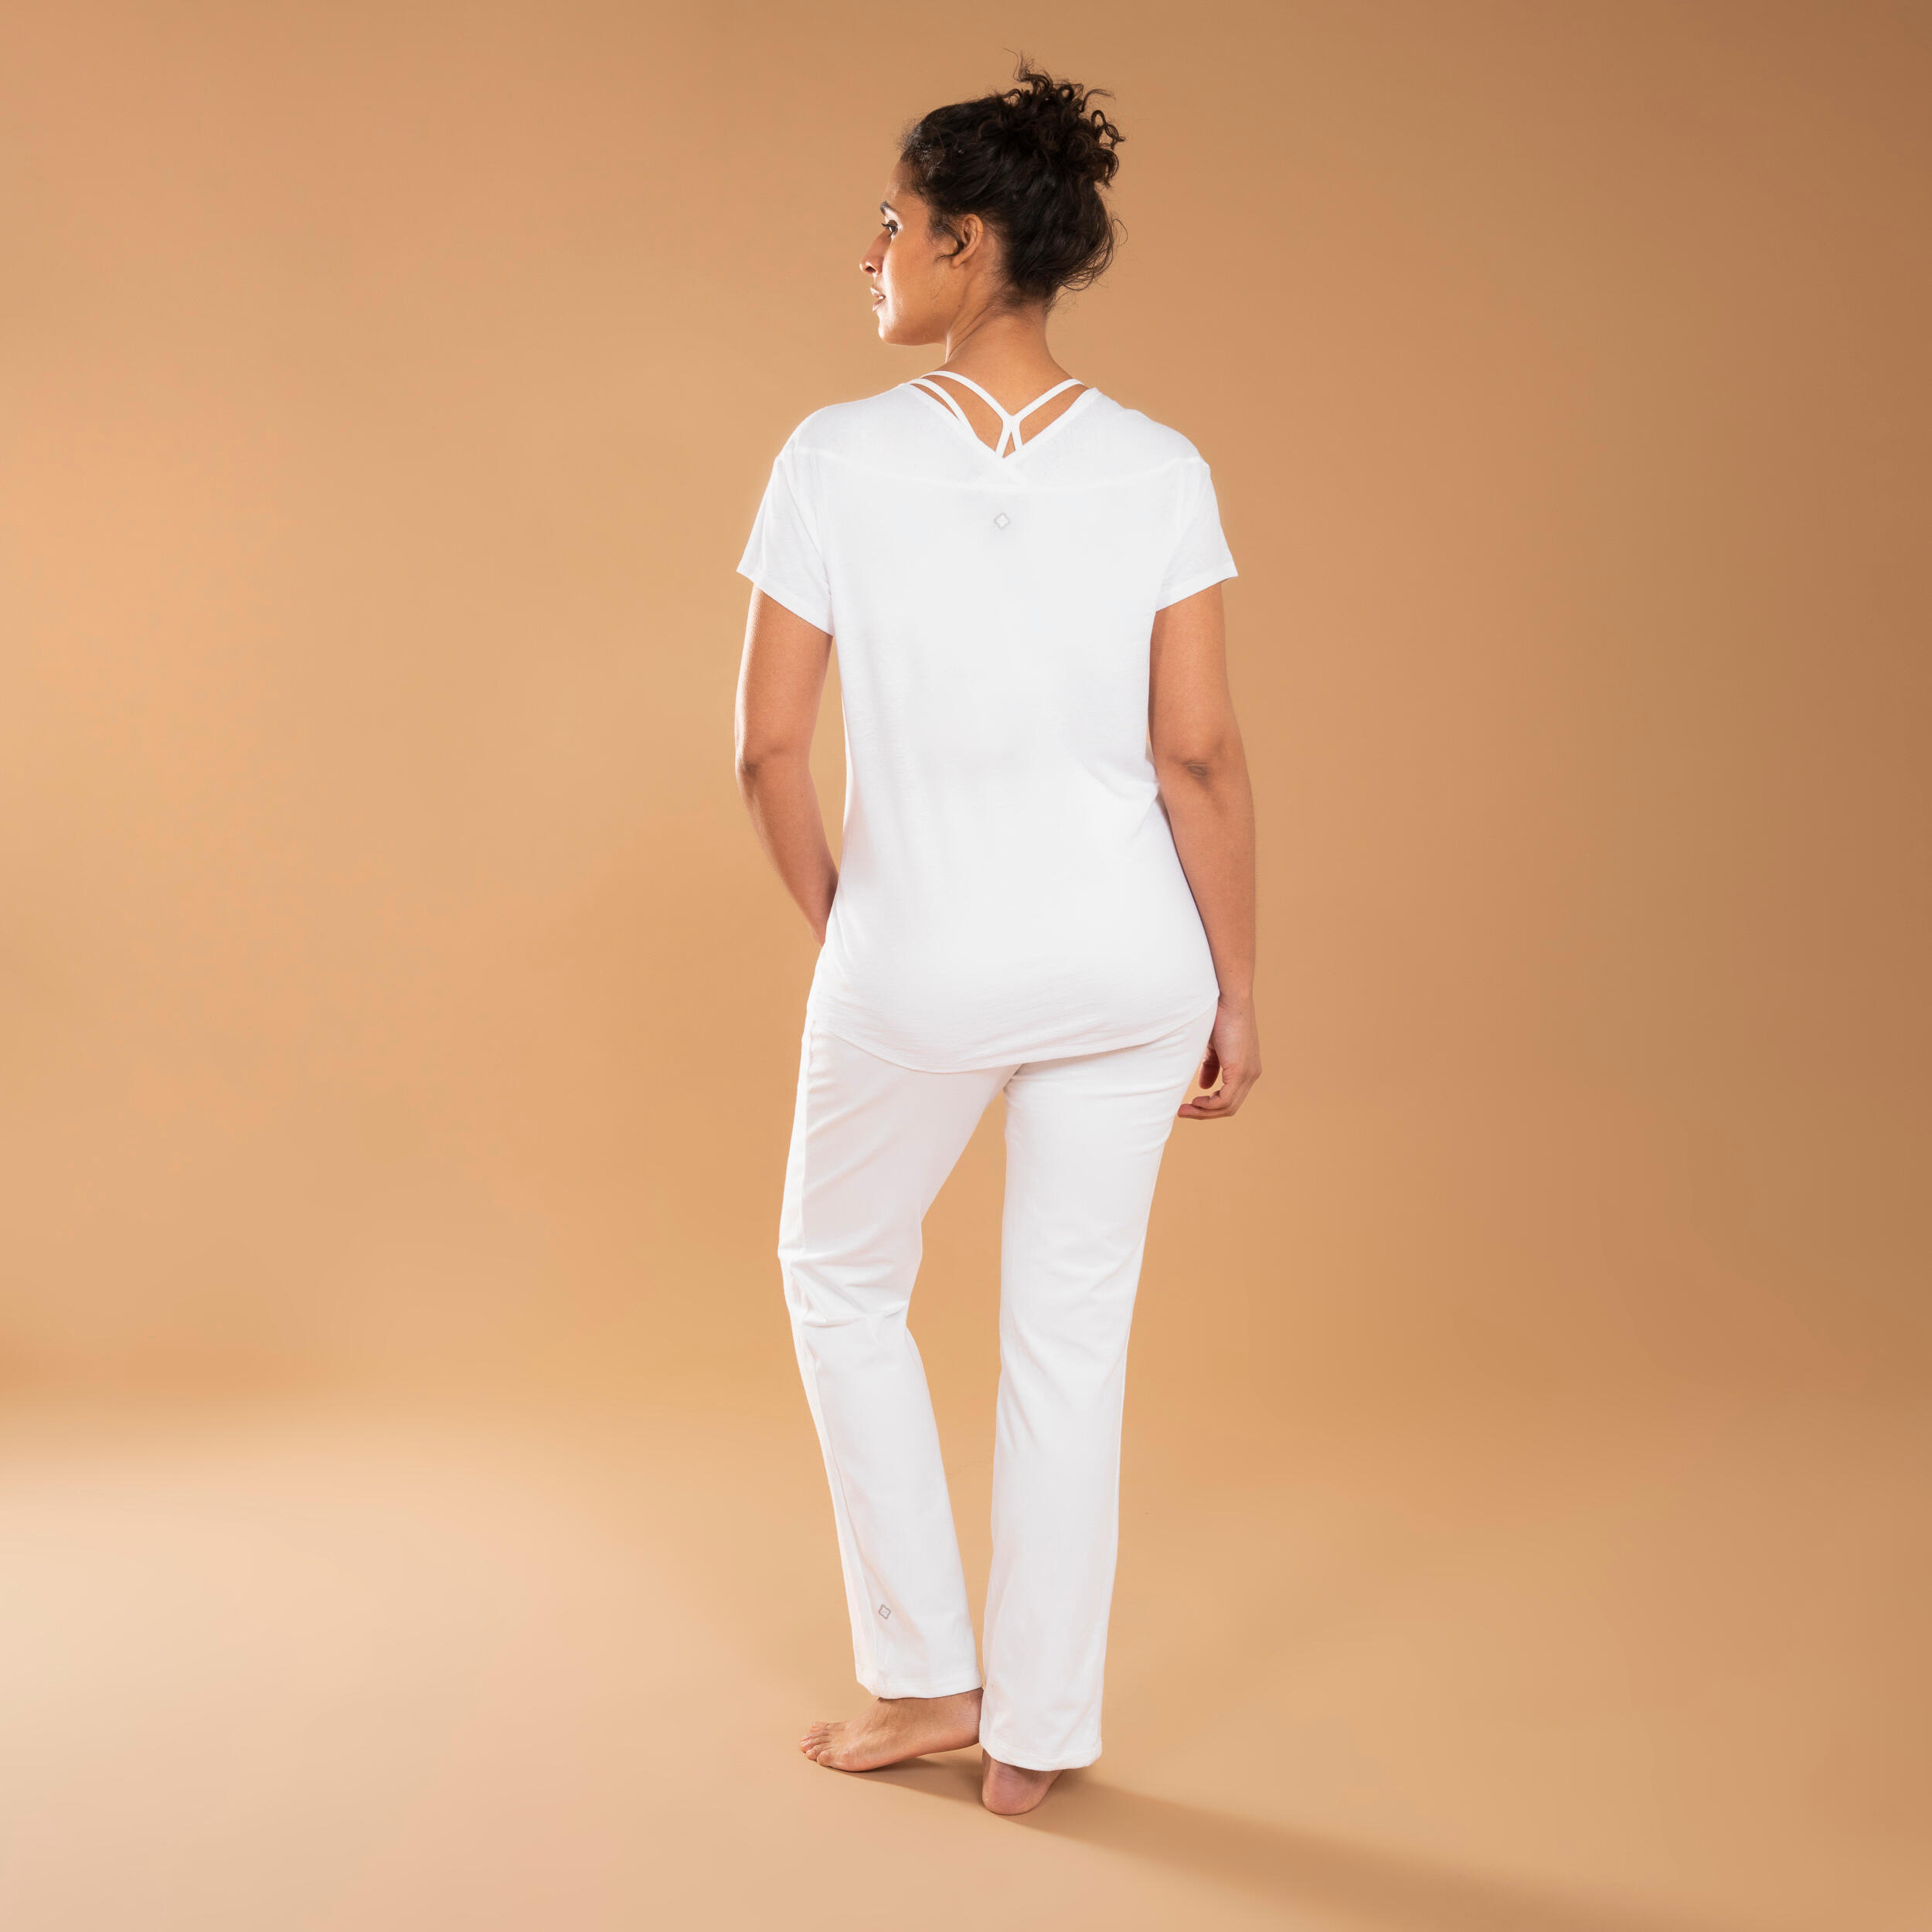 Women's Gentle Yoga T-Shirt - White 4/5